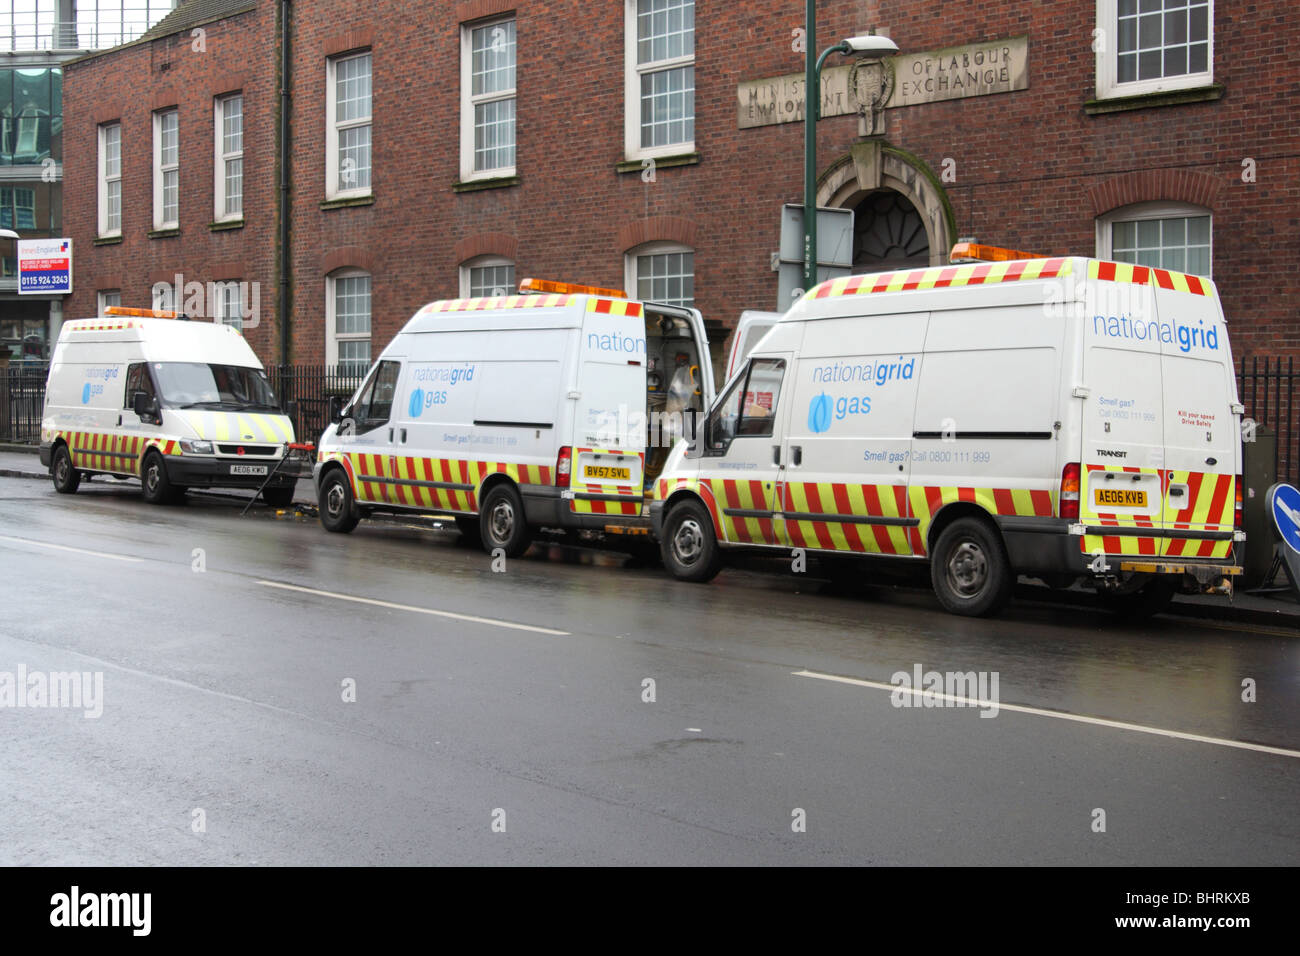 National Grid maintenance vans in a U.K. city. Stock Photo